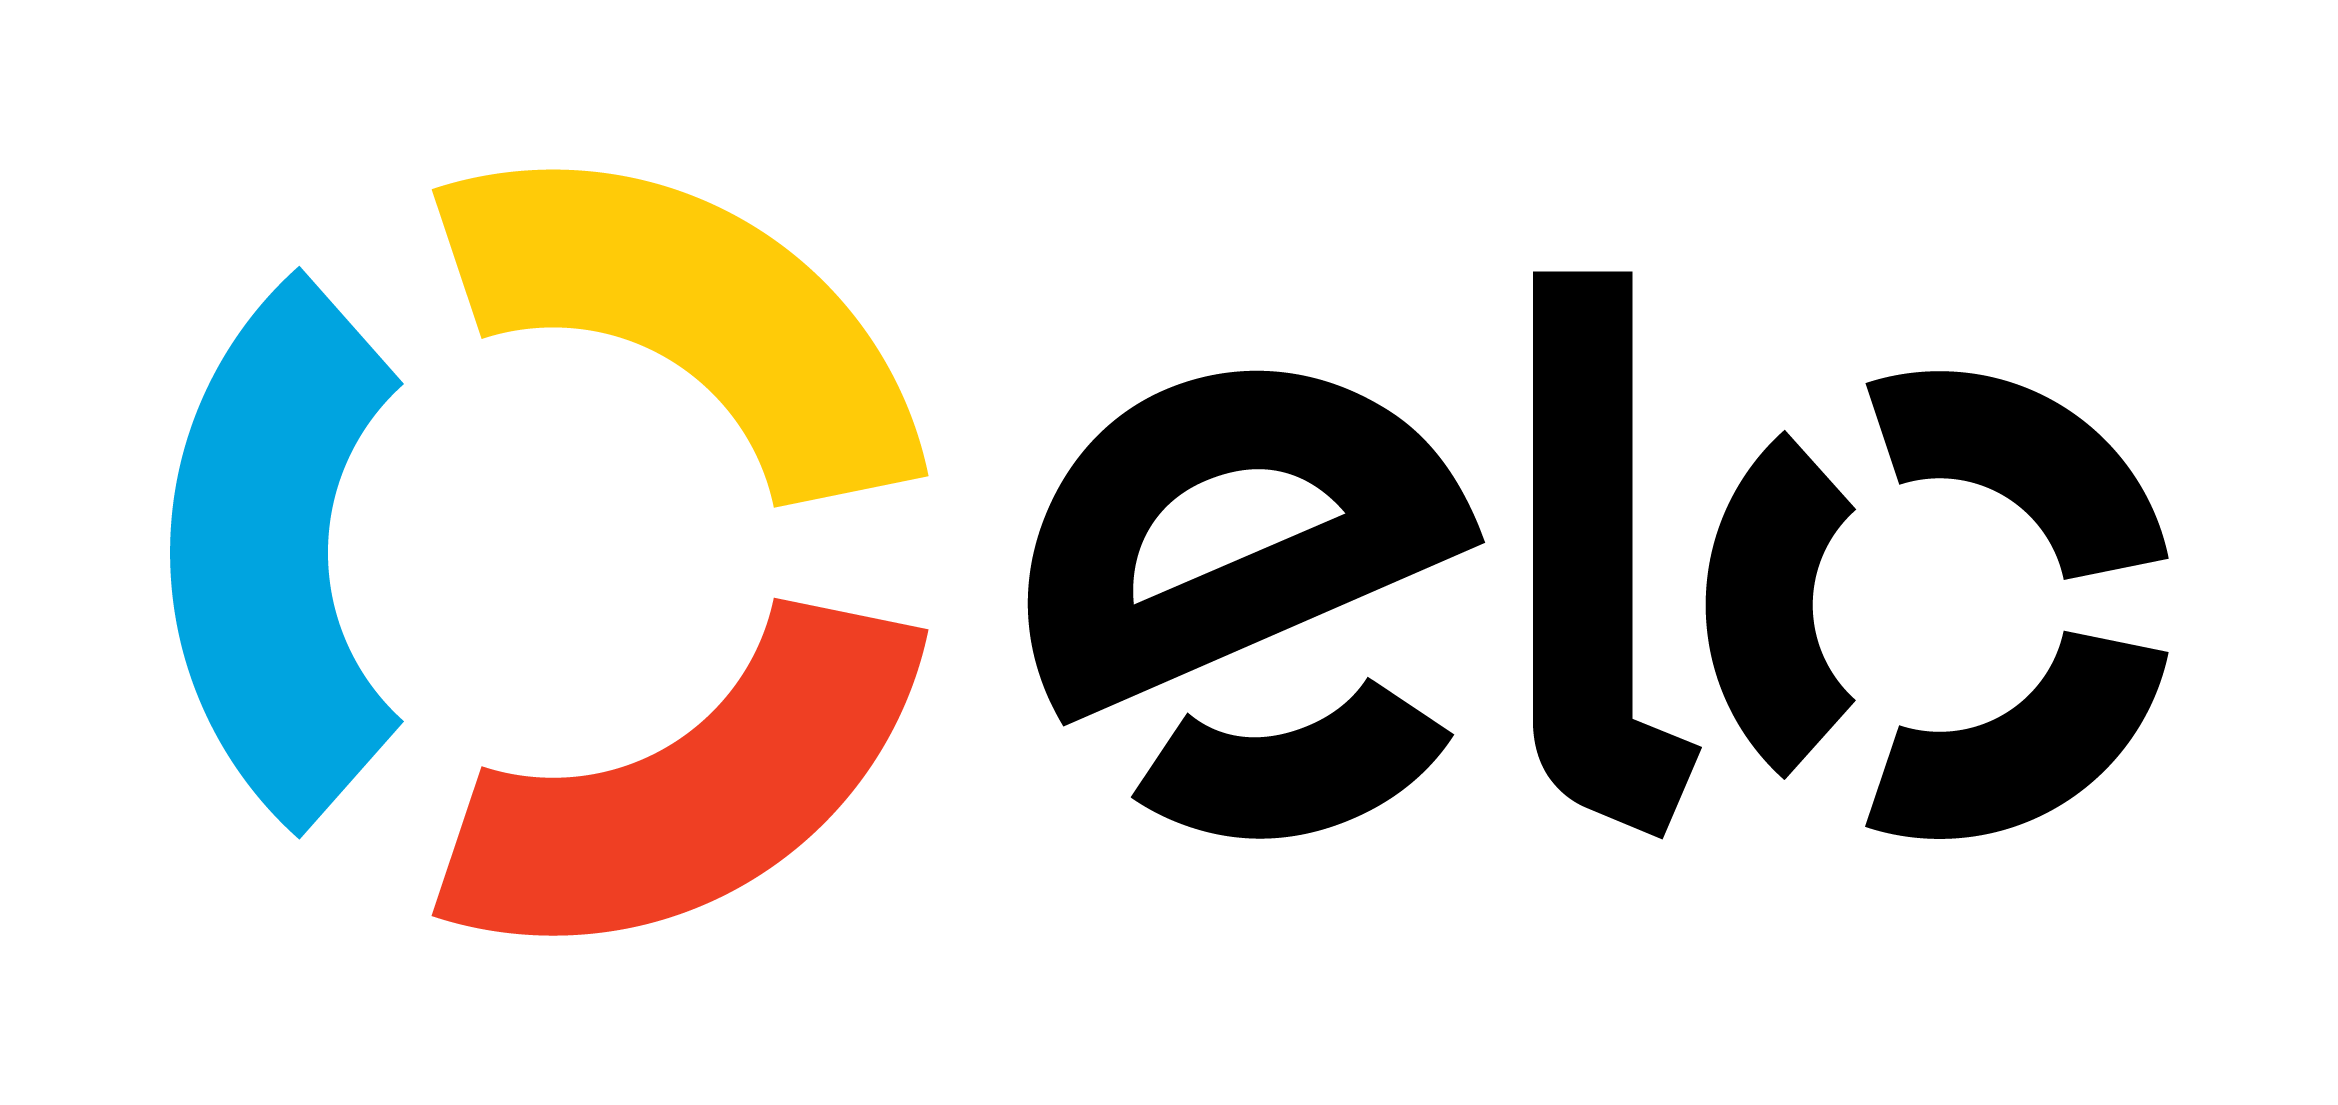 Logomarca Elo